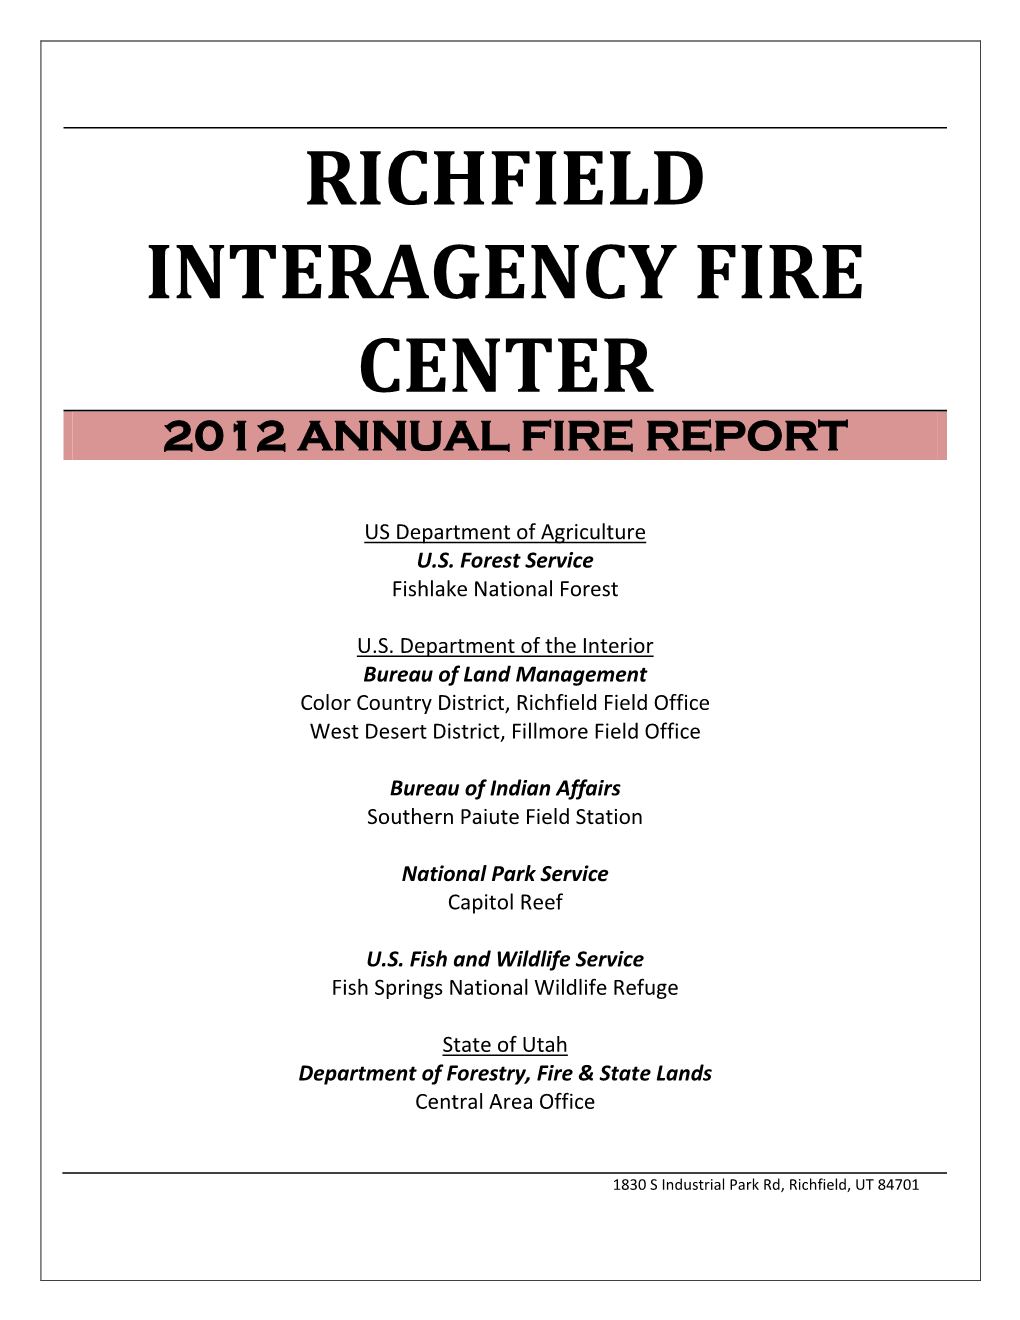 Richfield Interagency Fire Center 2012 Annual Fire Report